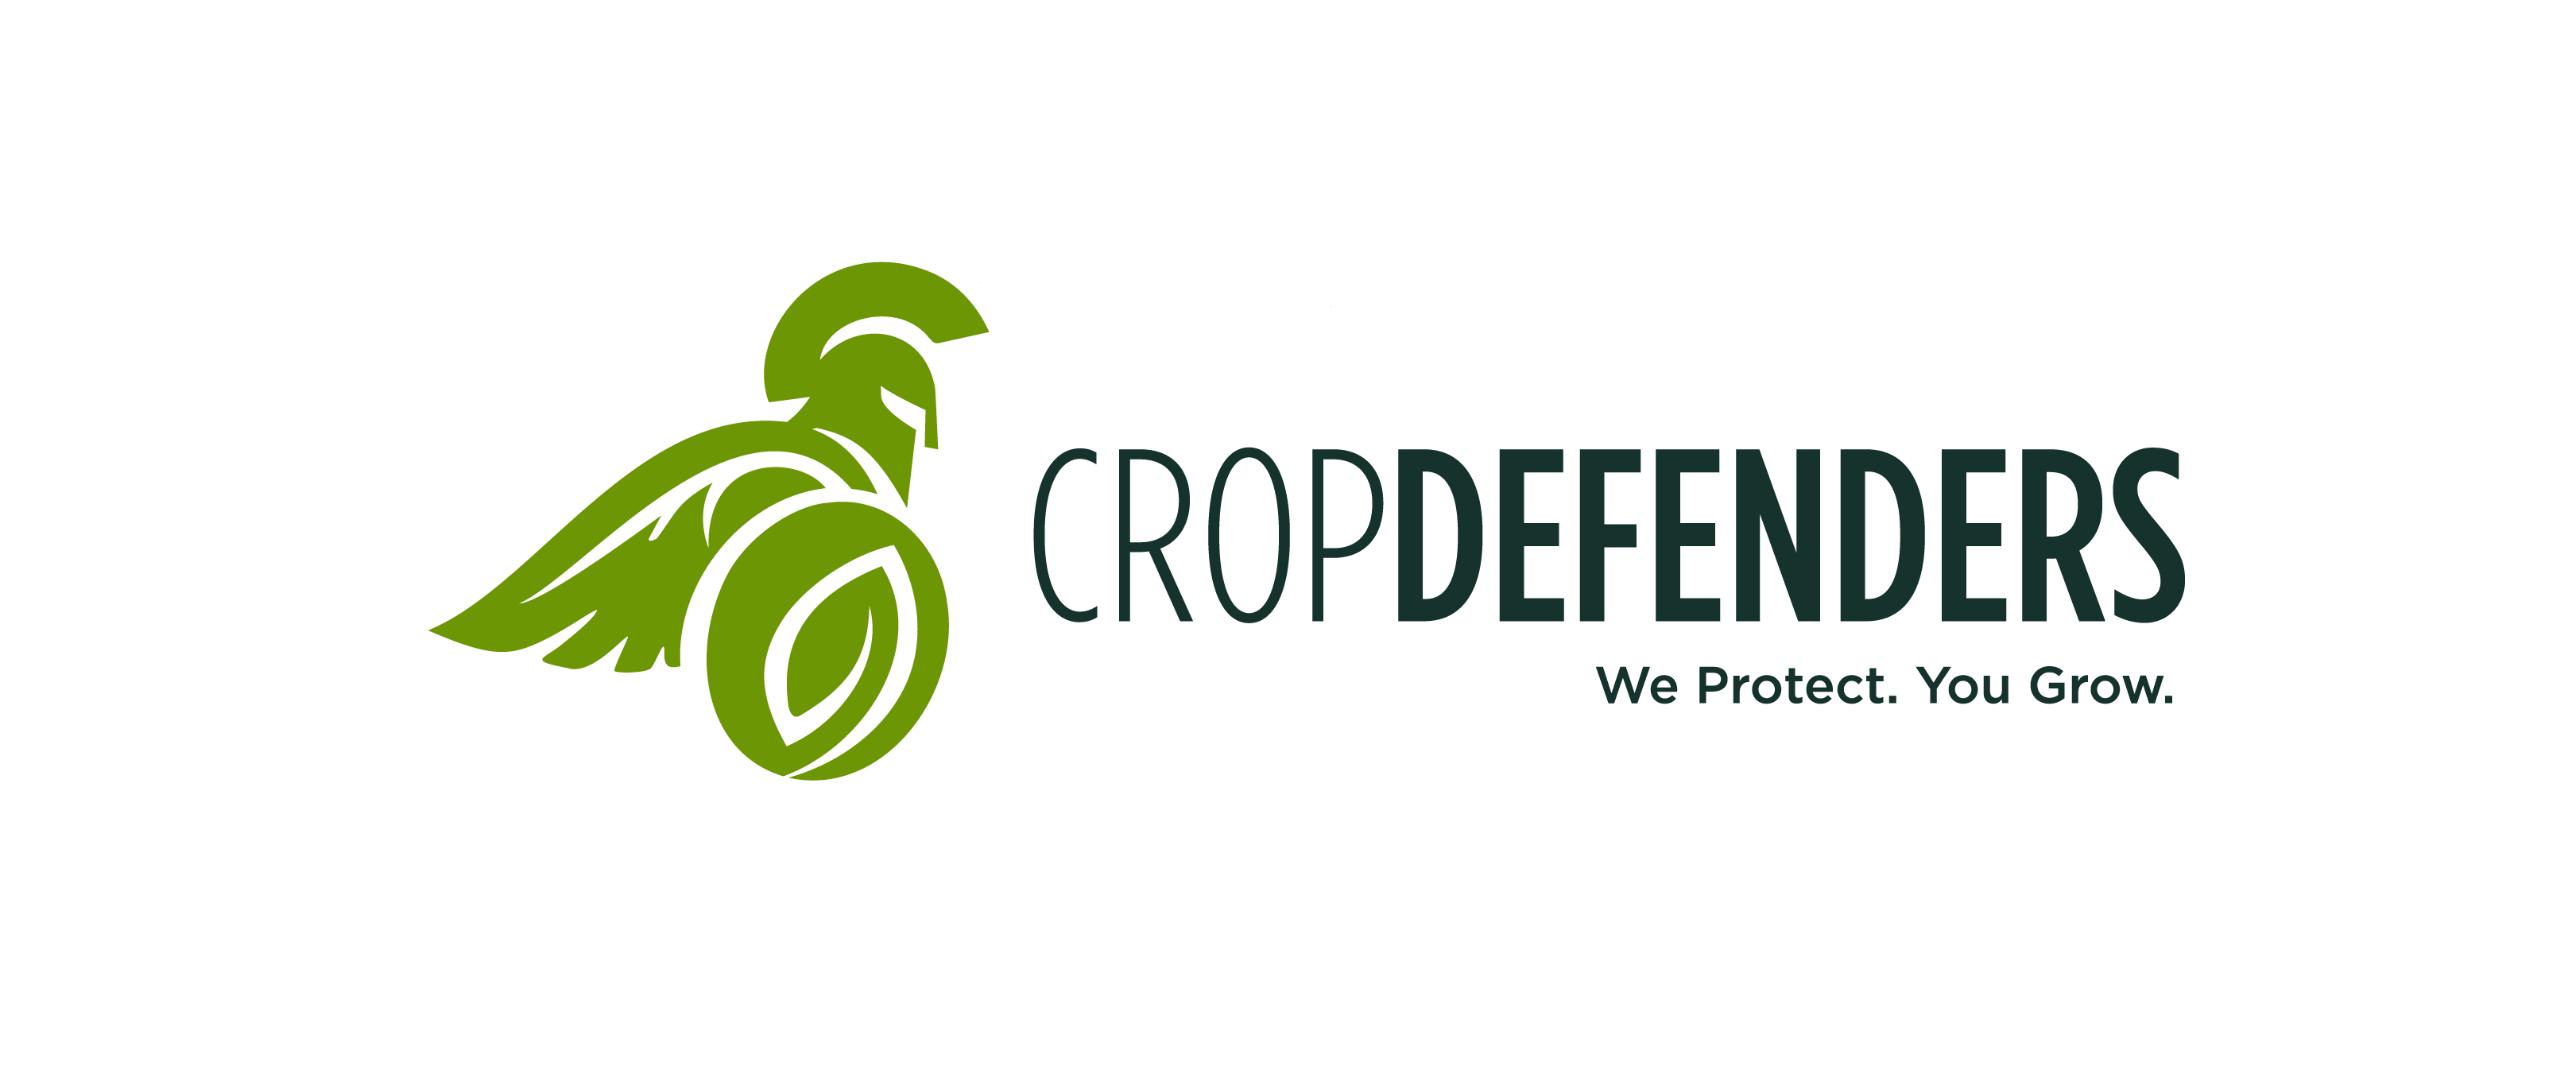 Crop Defenders Ltd.